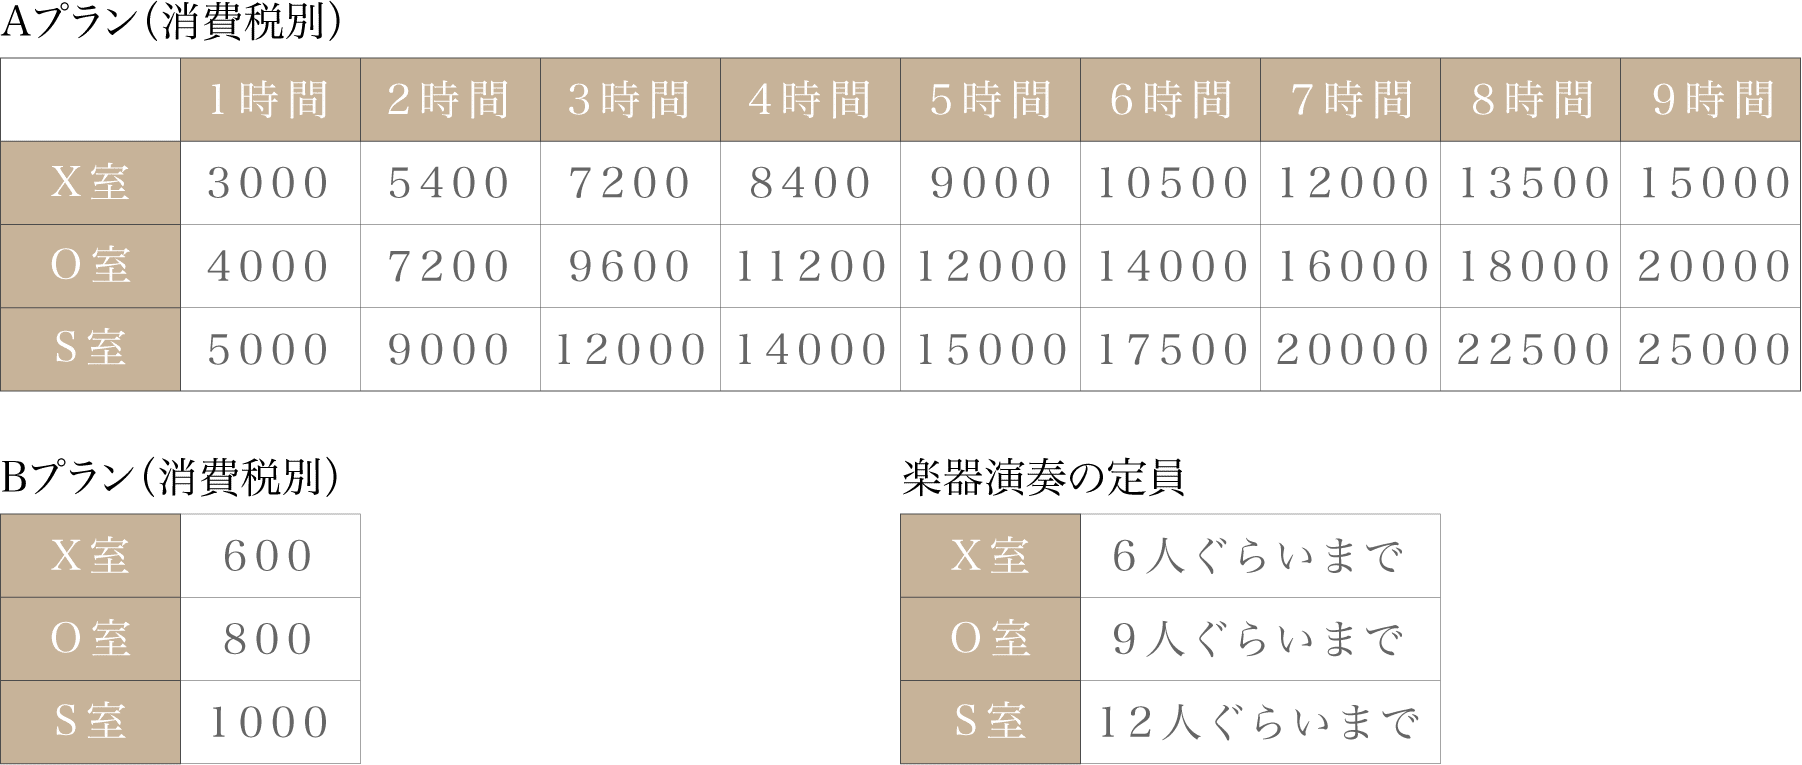 price_001(9時間)